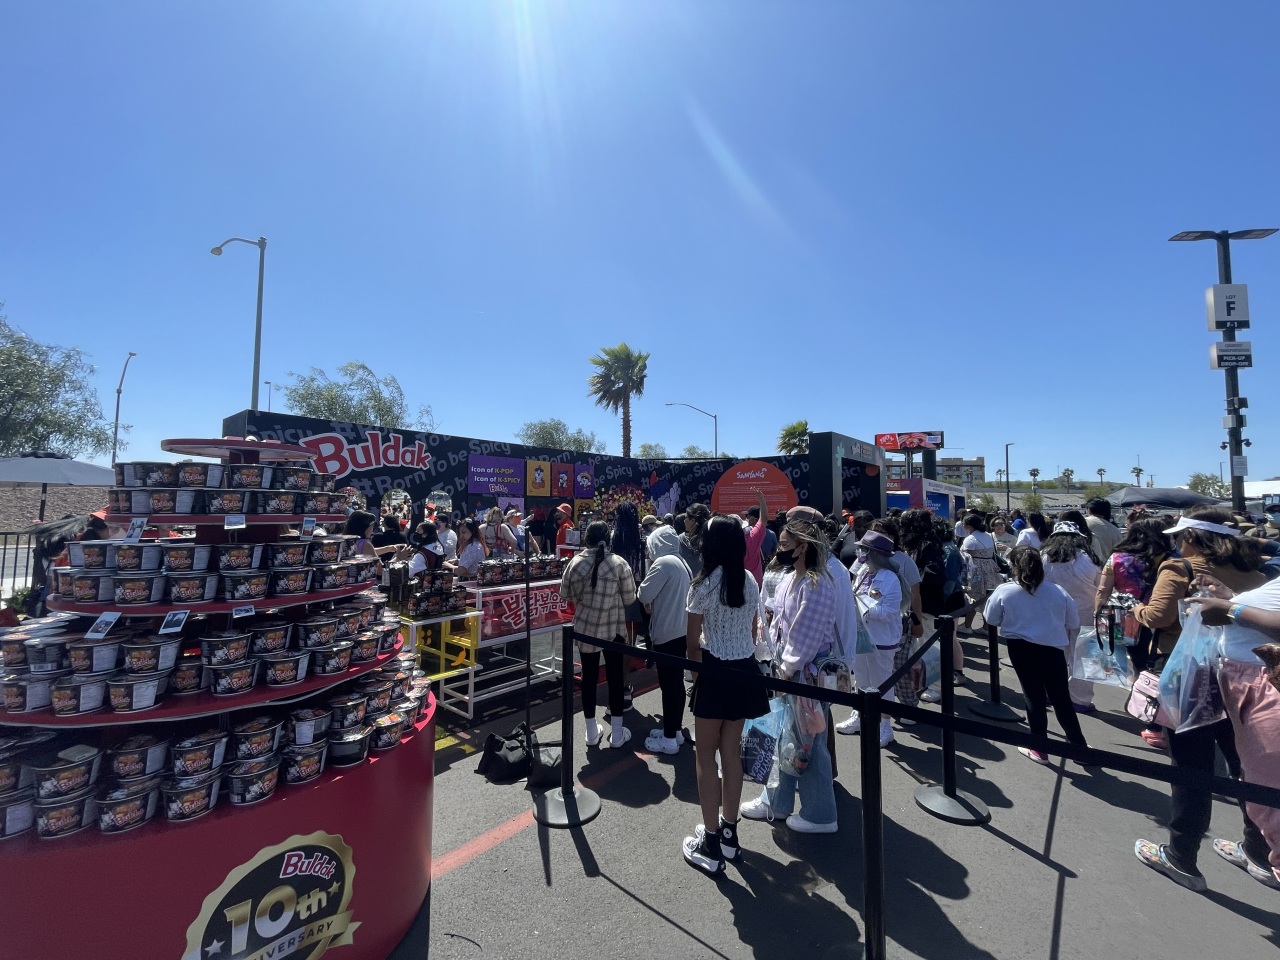 Samyang Foods' Buldak promotional booth at BTS' concert in Las Vegas (Samyang Foods)